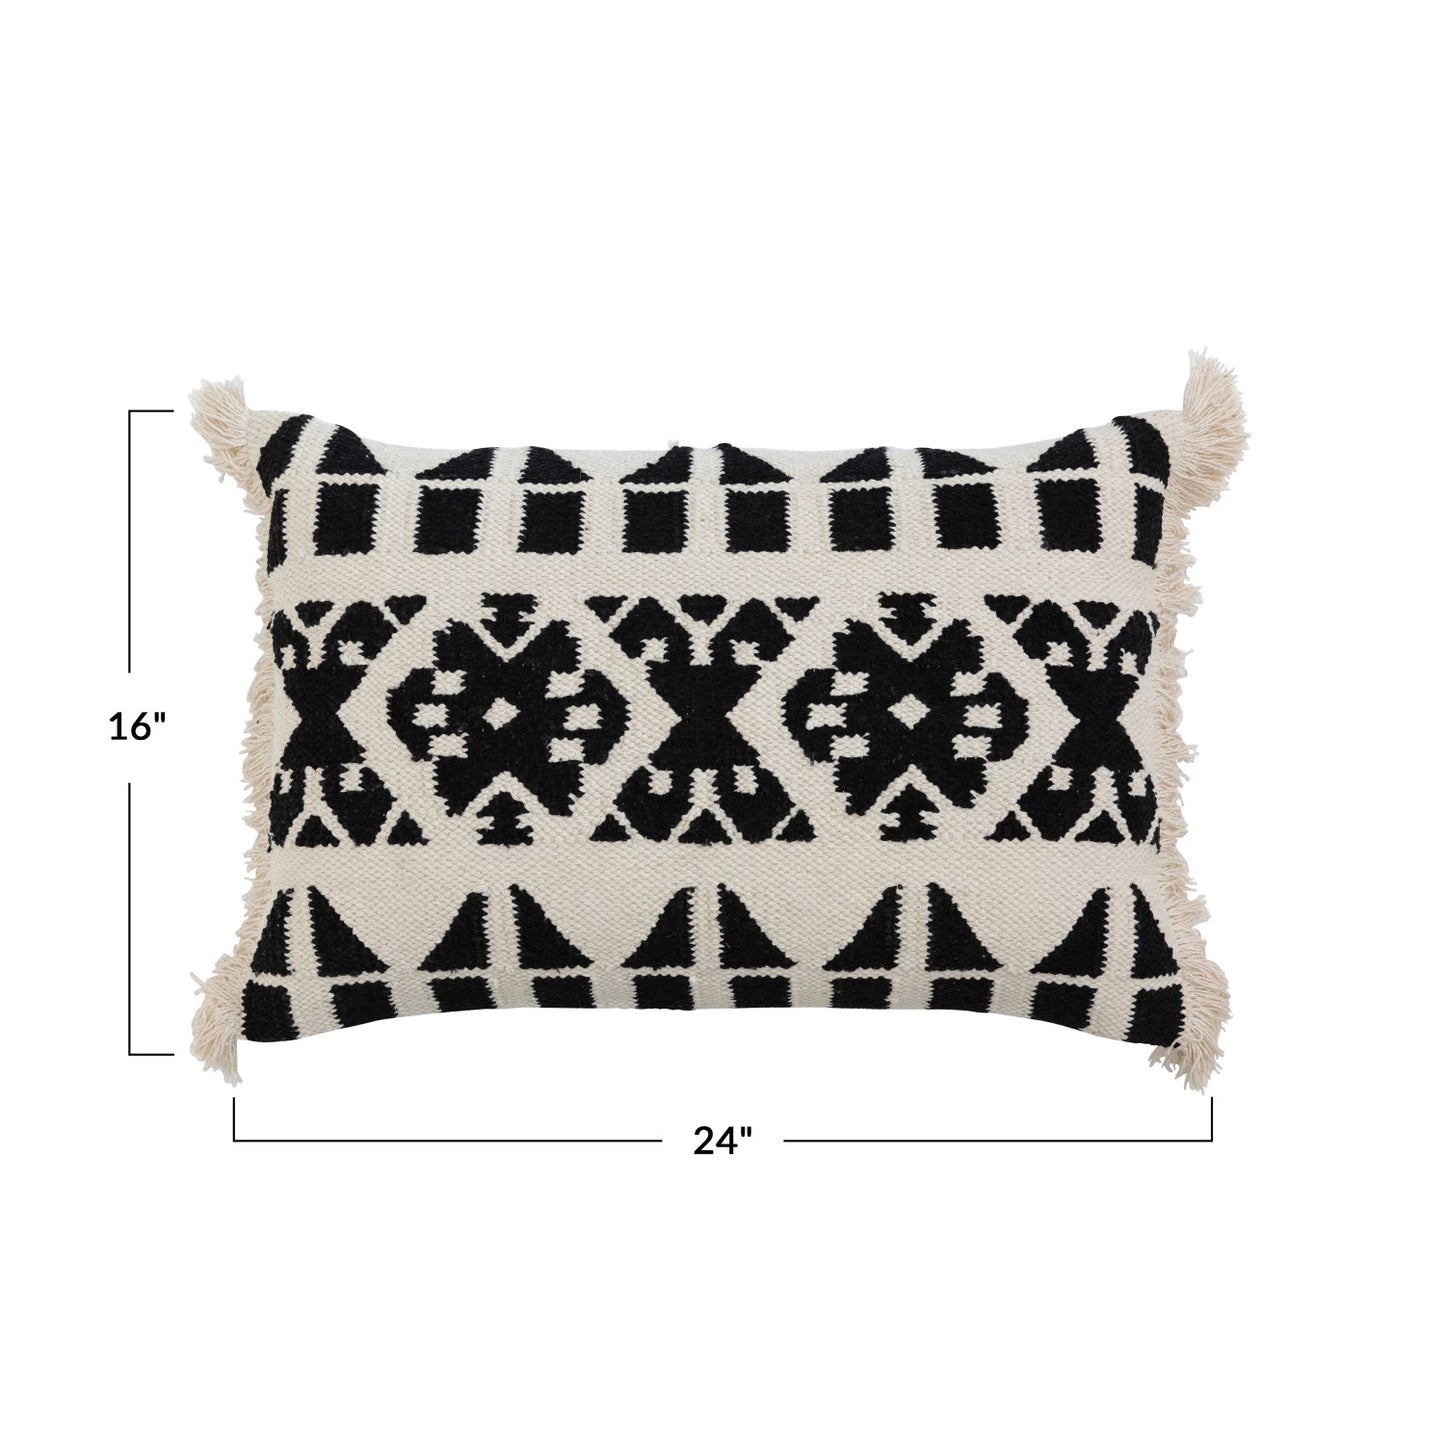 24" x 16" H&-Woven Cotton Kilim Lumbar Pillow w/ Pattern & Fringe